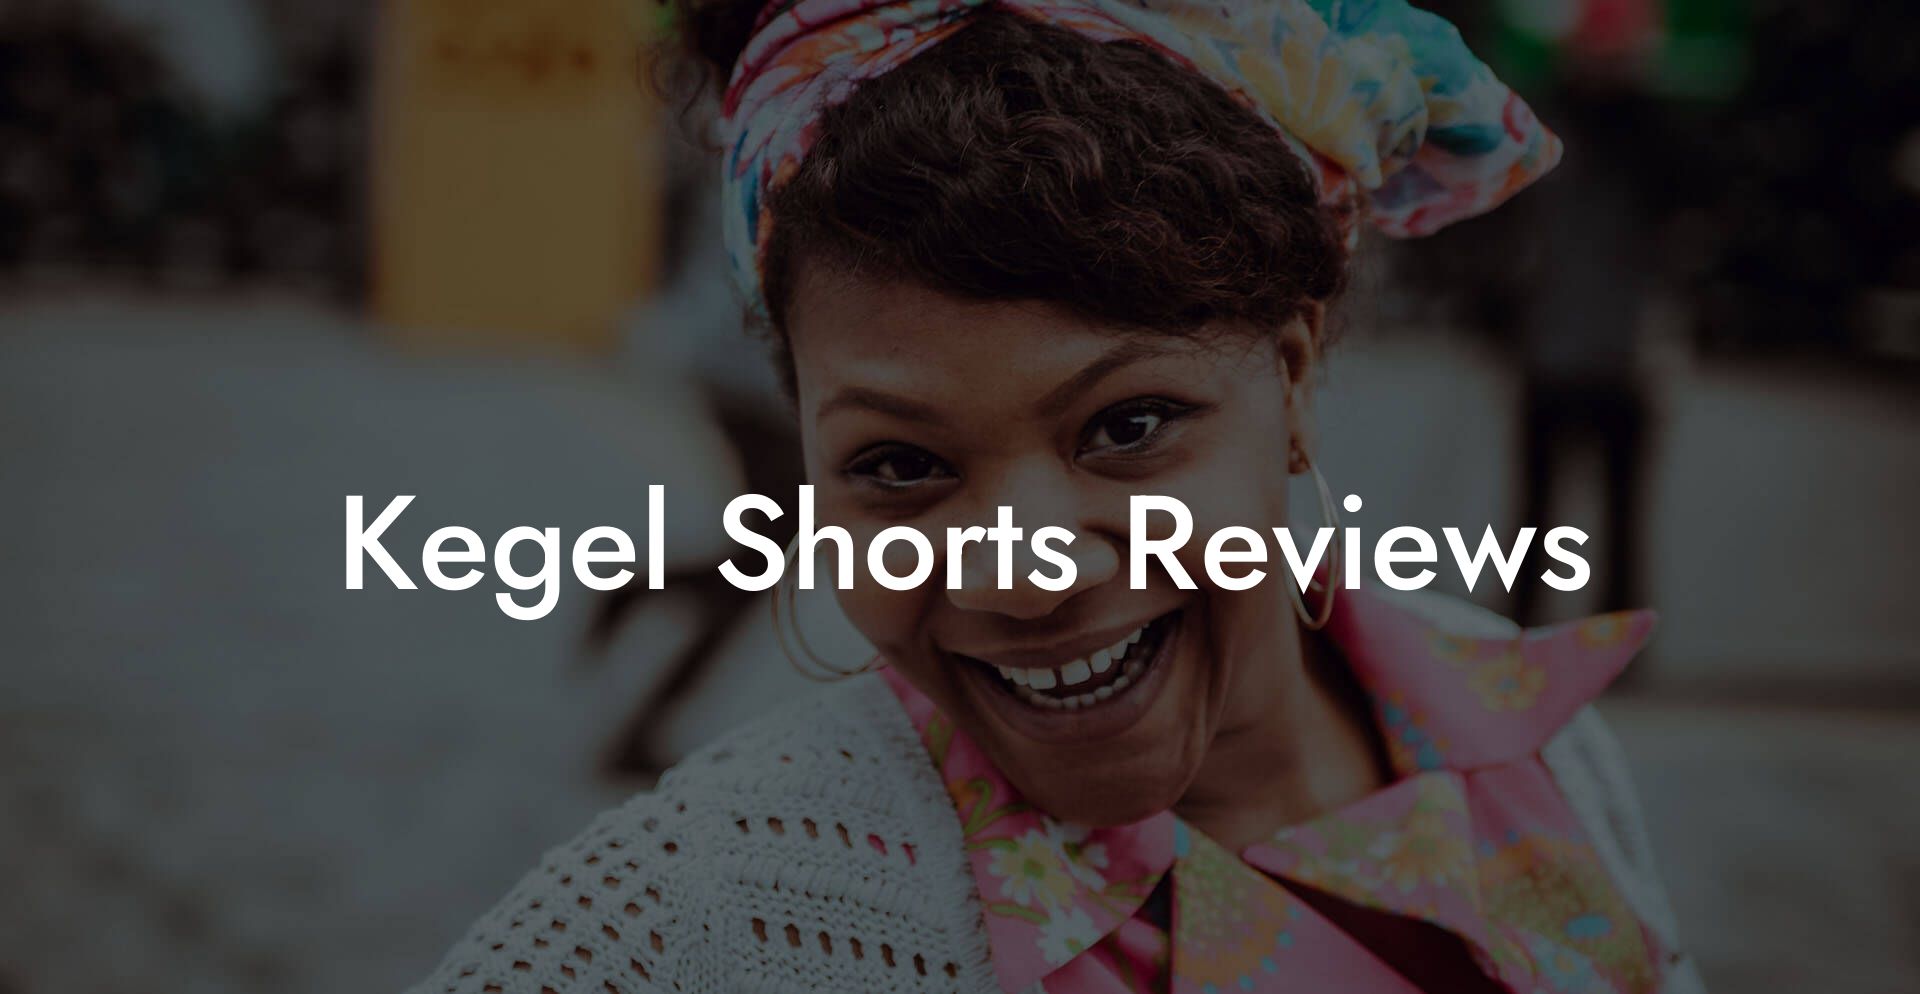 Kegel Shorts Reviews